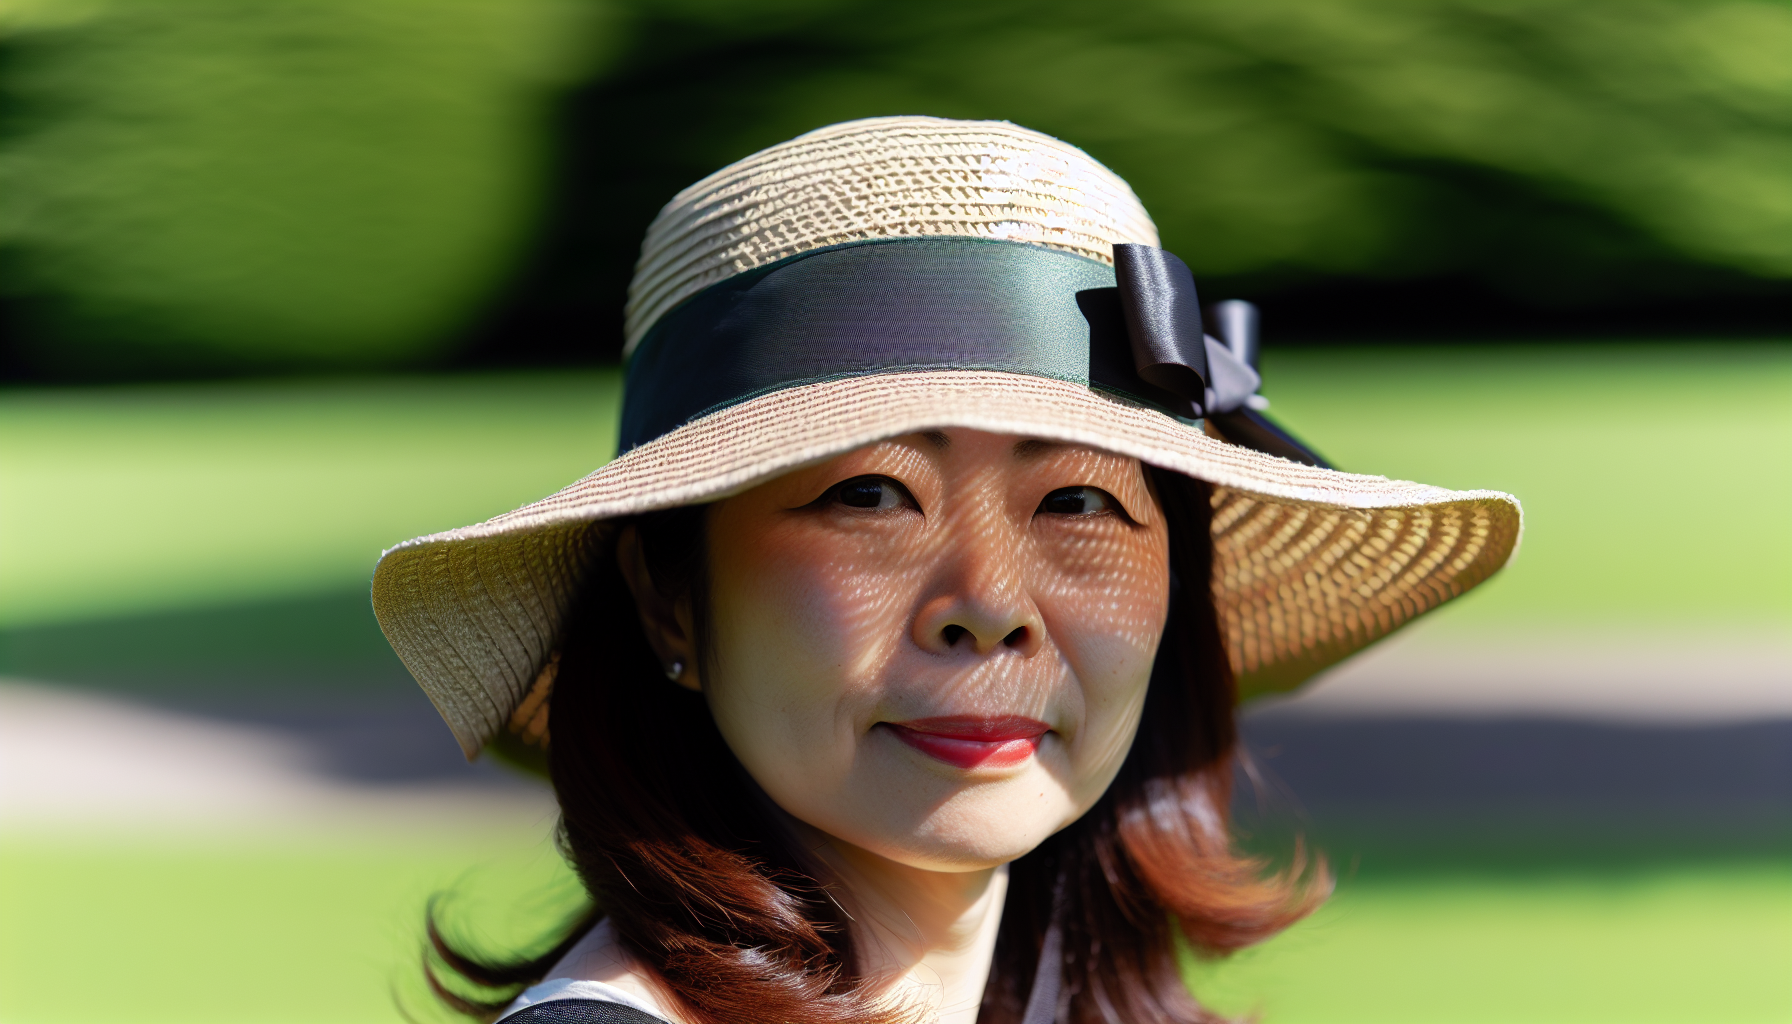 Wide brim sun visor hat providing shade and UV protection